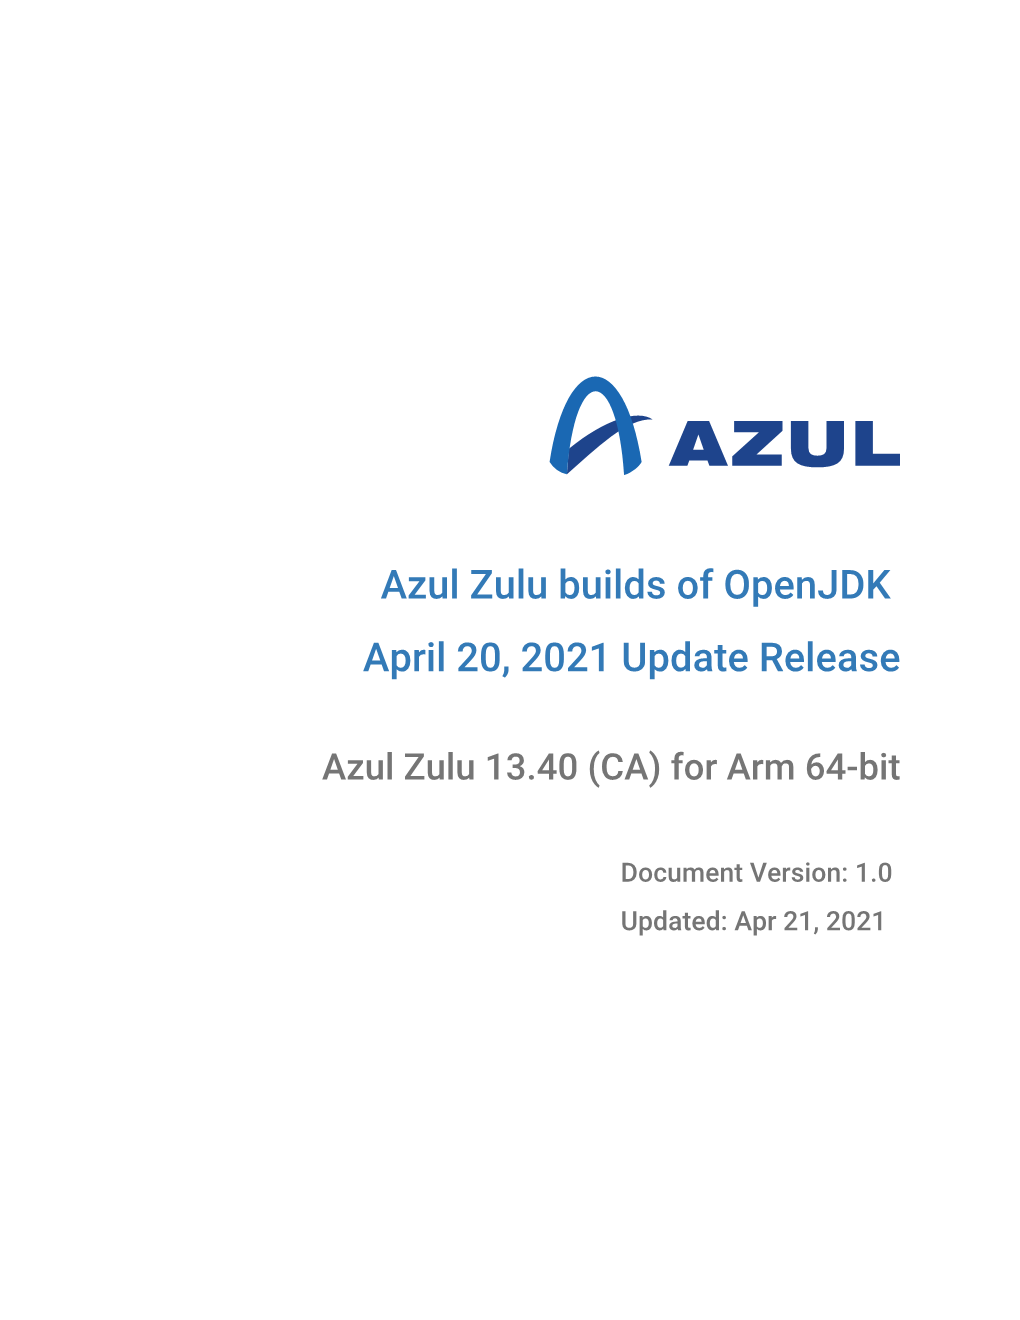 Azul Zulu Builds of Openjdk April 20, 2021 Update Release: Azul Zulu 13.40 (CA) for Arm 64-Bit